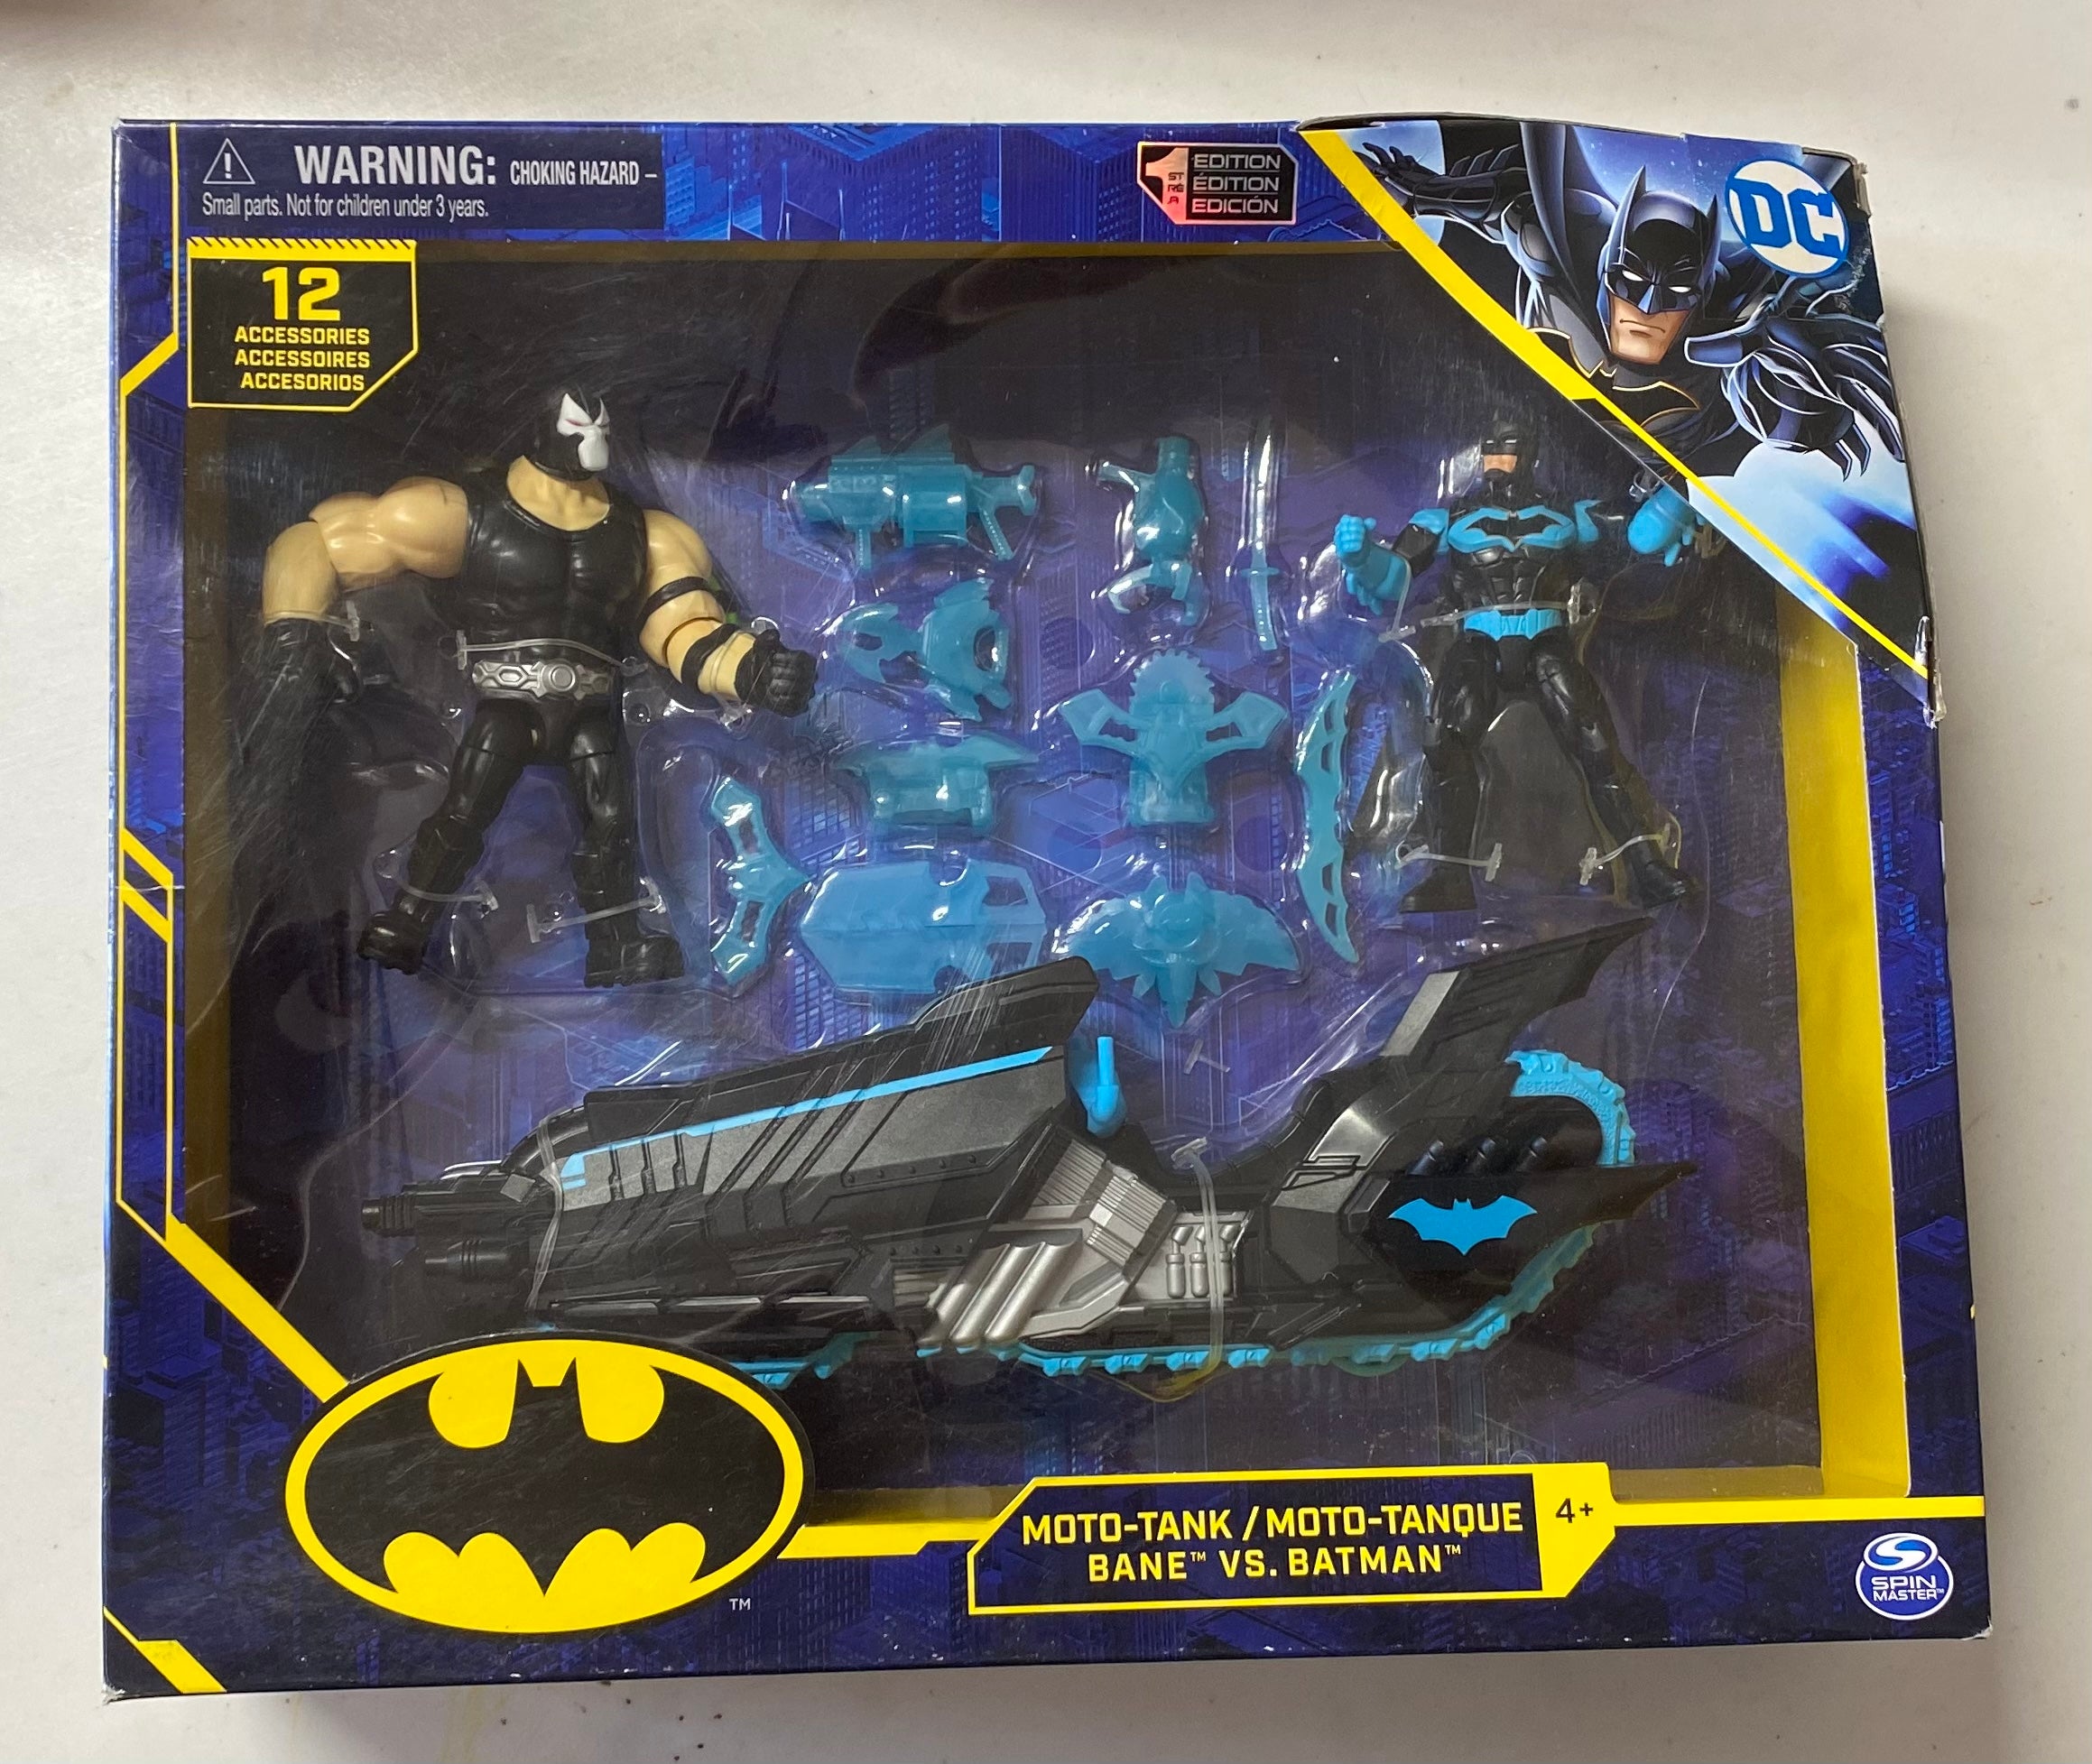 The Joker Prank Shop Ultimate Prank Kit (DC Comics) Batman Toy